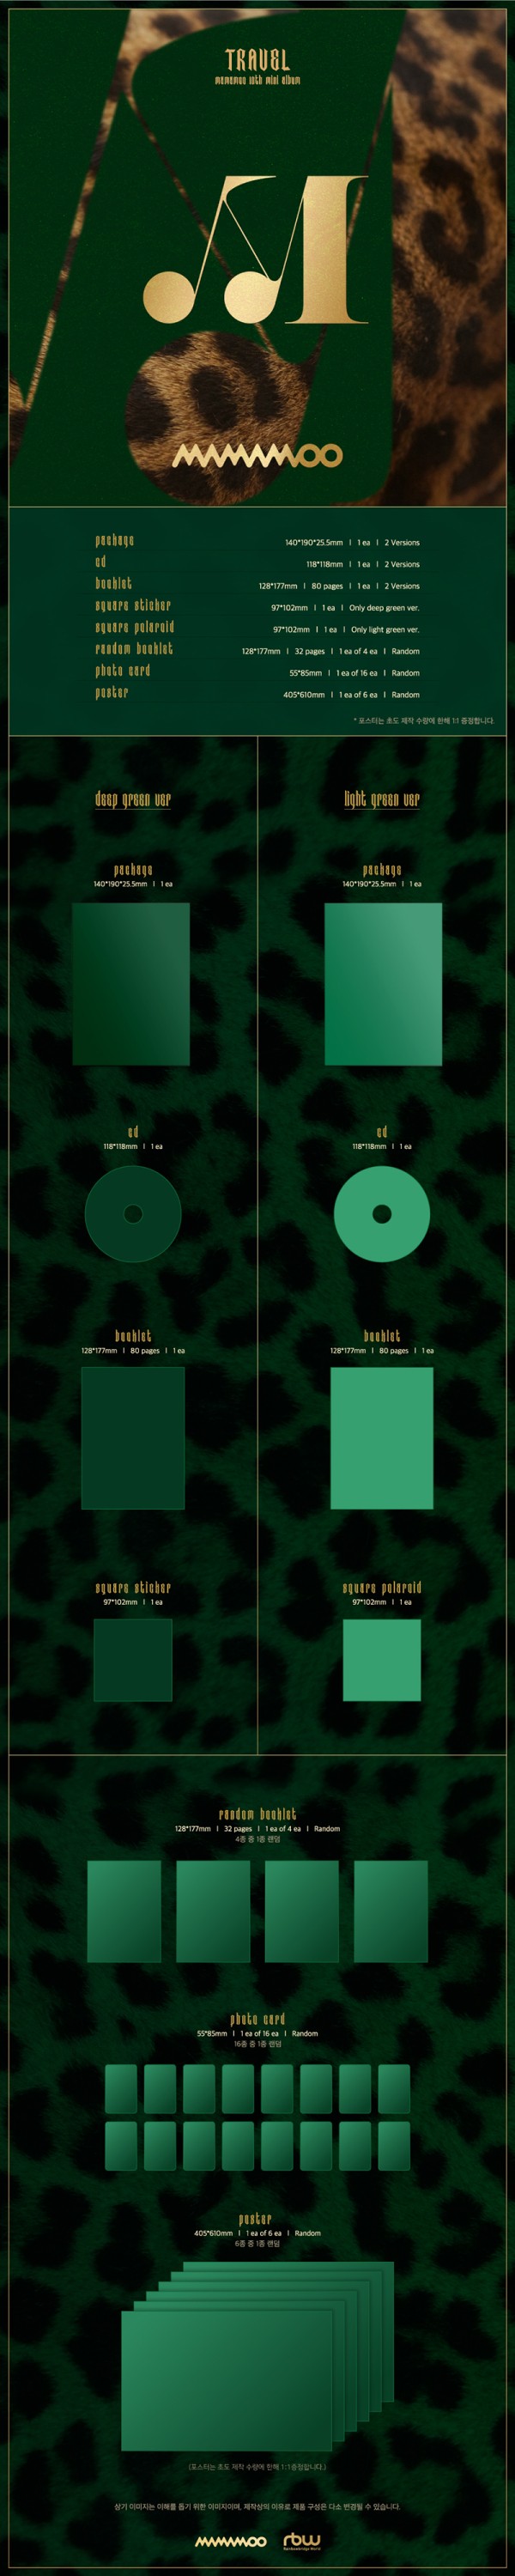 MAMAMOO｜韓国10枚目のミニアルバム『TRAVEL』 - TOWER RECORDS ONLINE